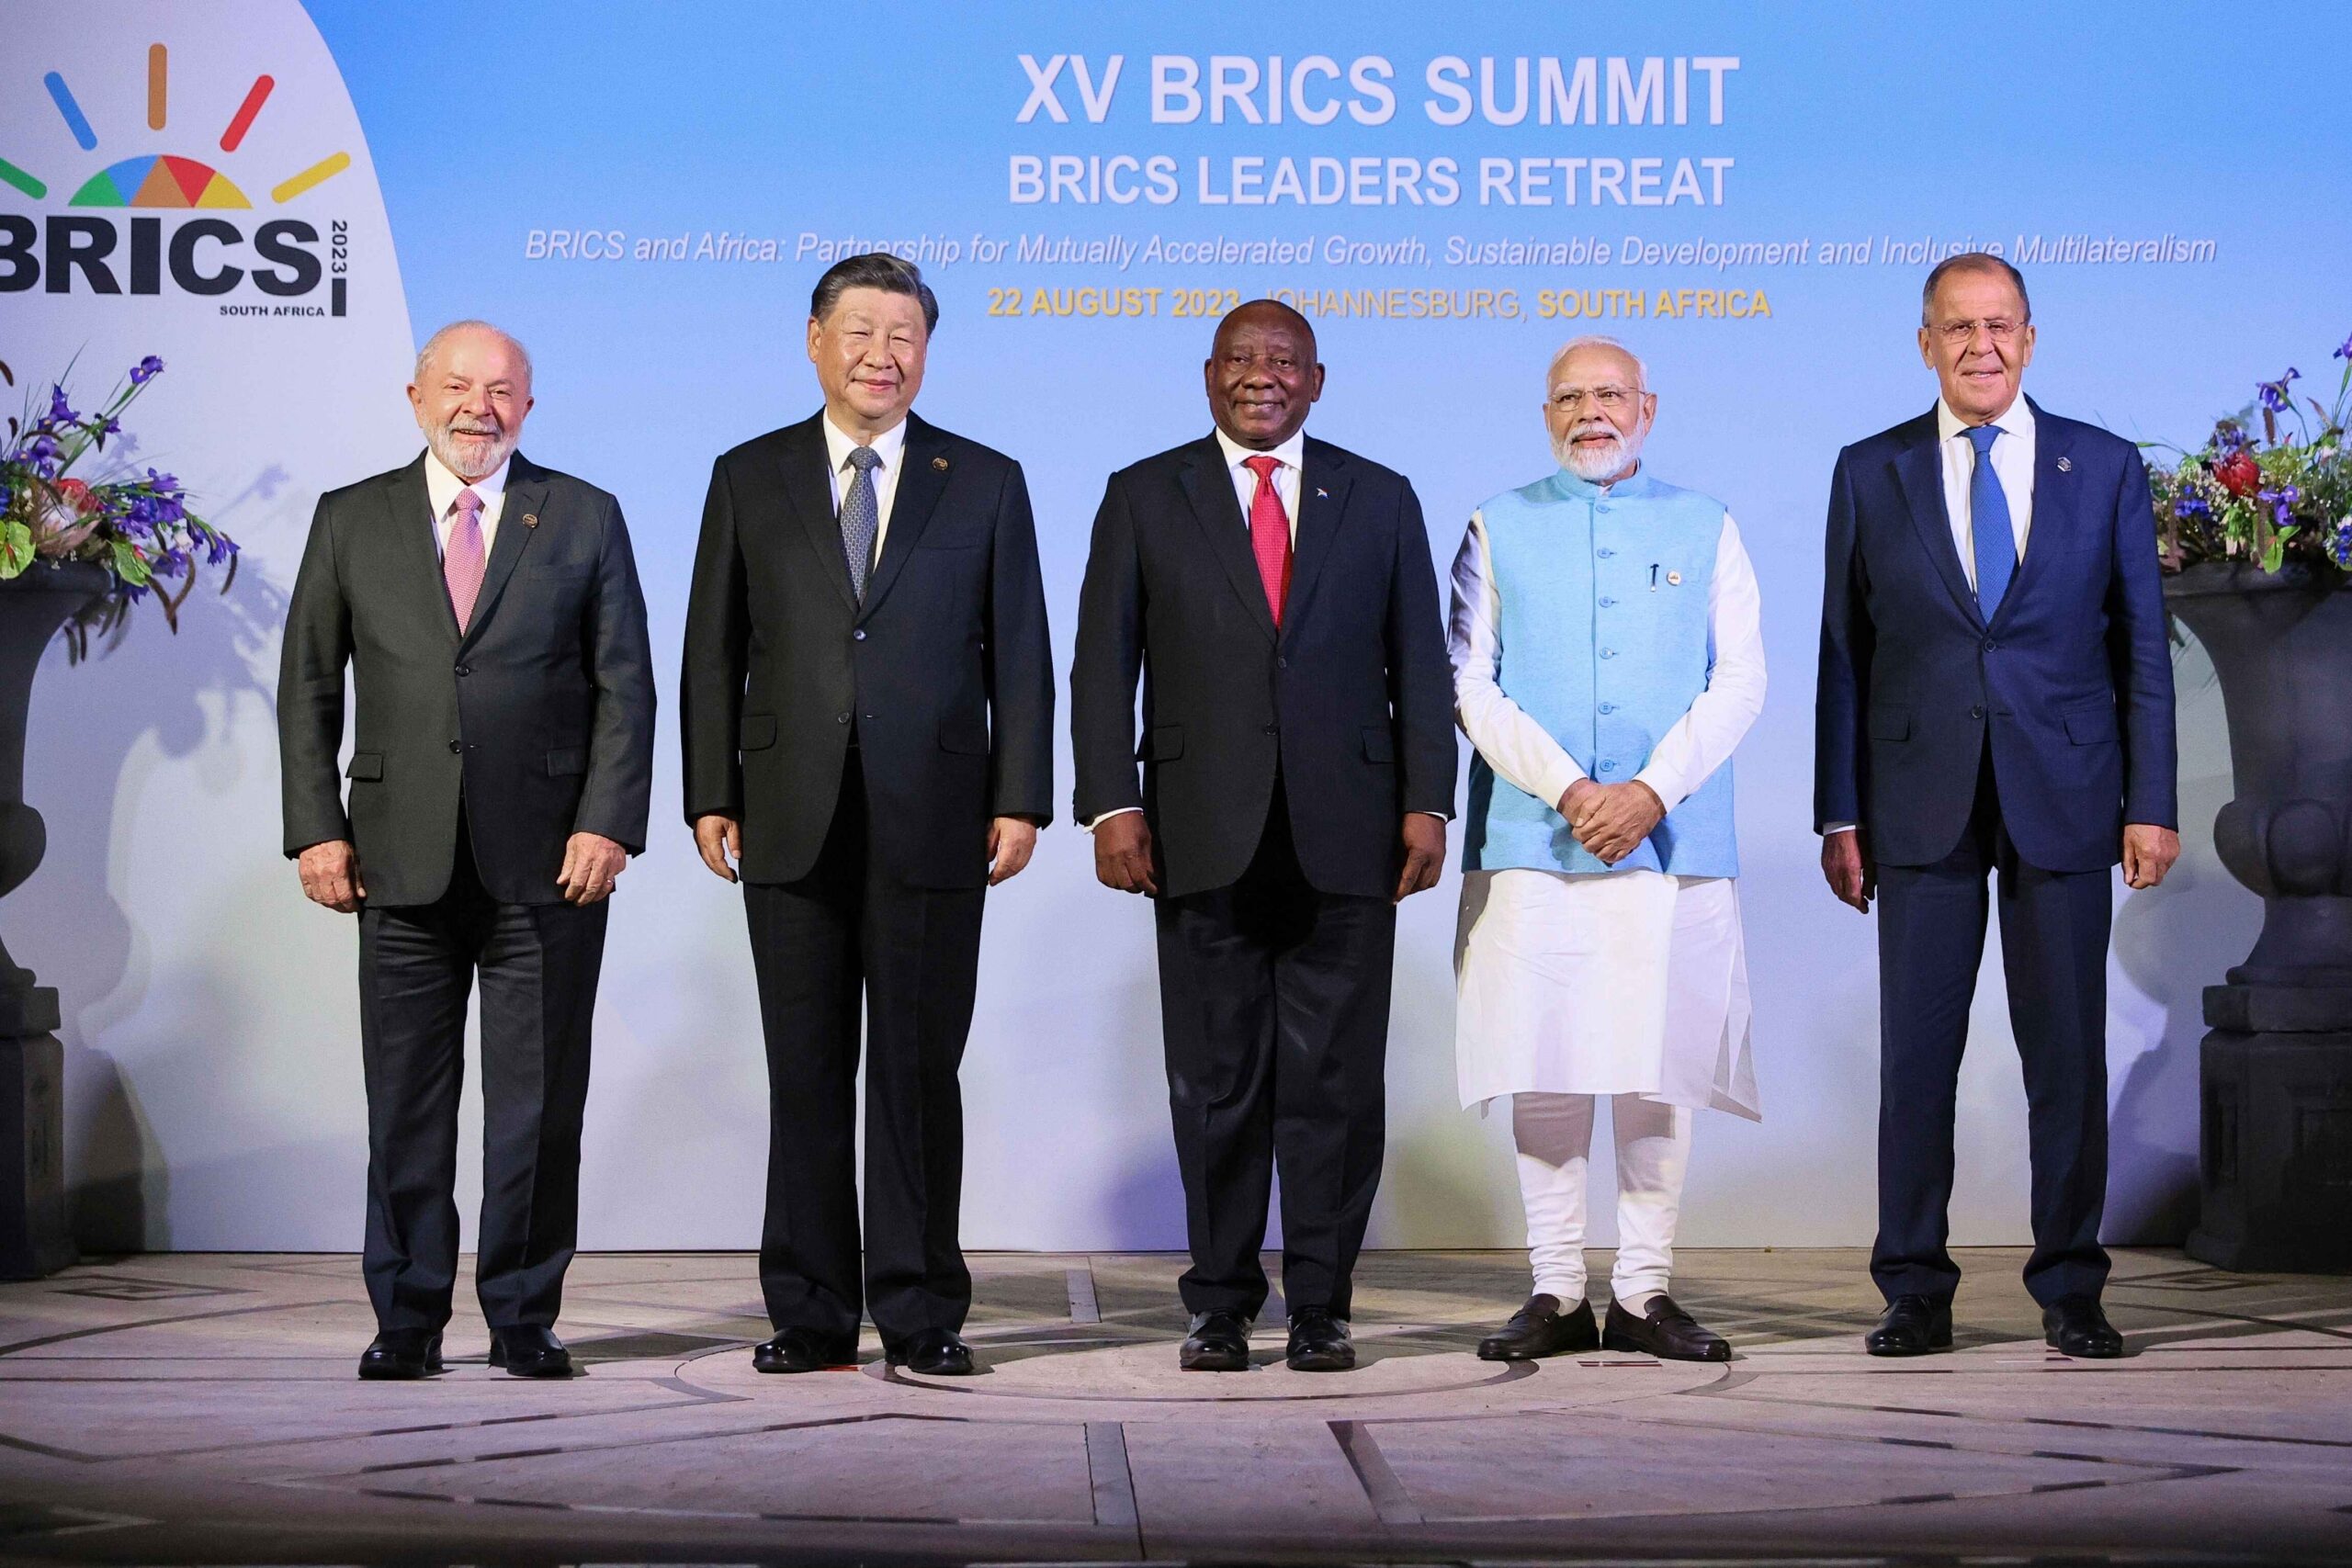 The BRICS leaders in 2023, from left to right: Lula da Silva, Xi Jinping, Cyril Ramaphosa, Narendra Modi and Sergey Lavrov (representing Vladimir Putin).